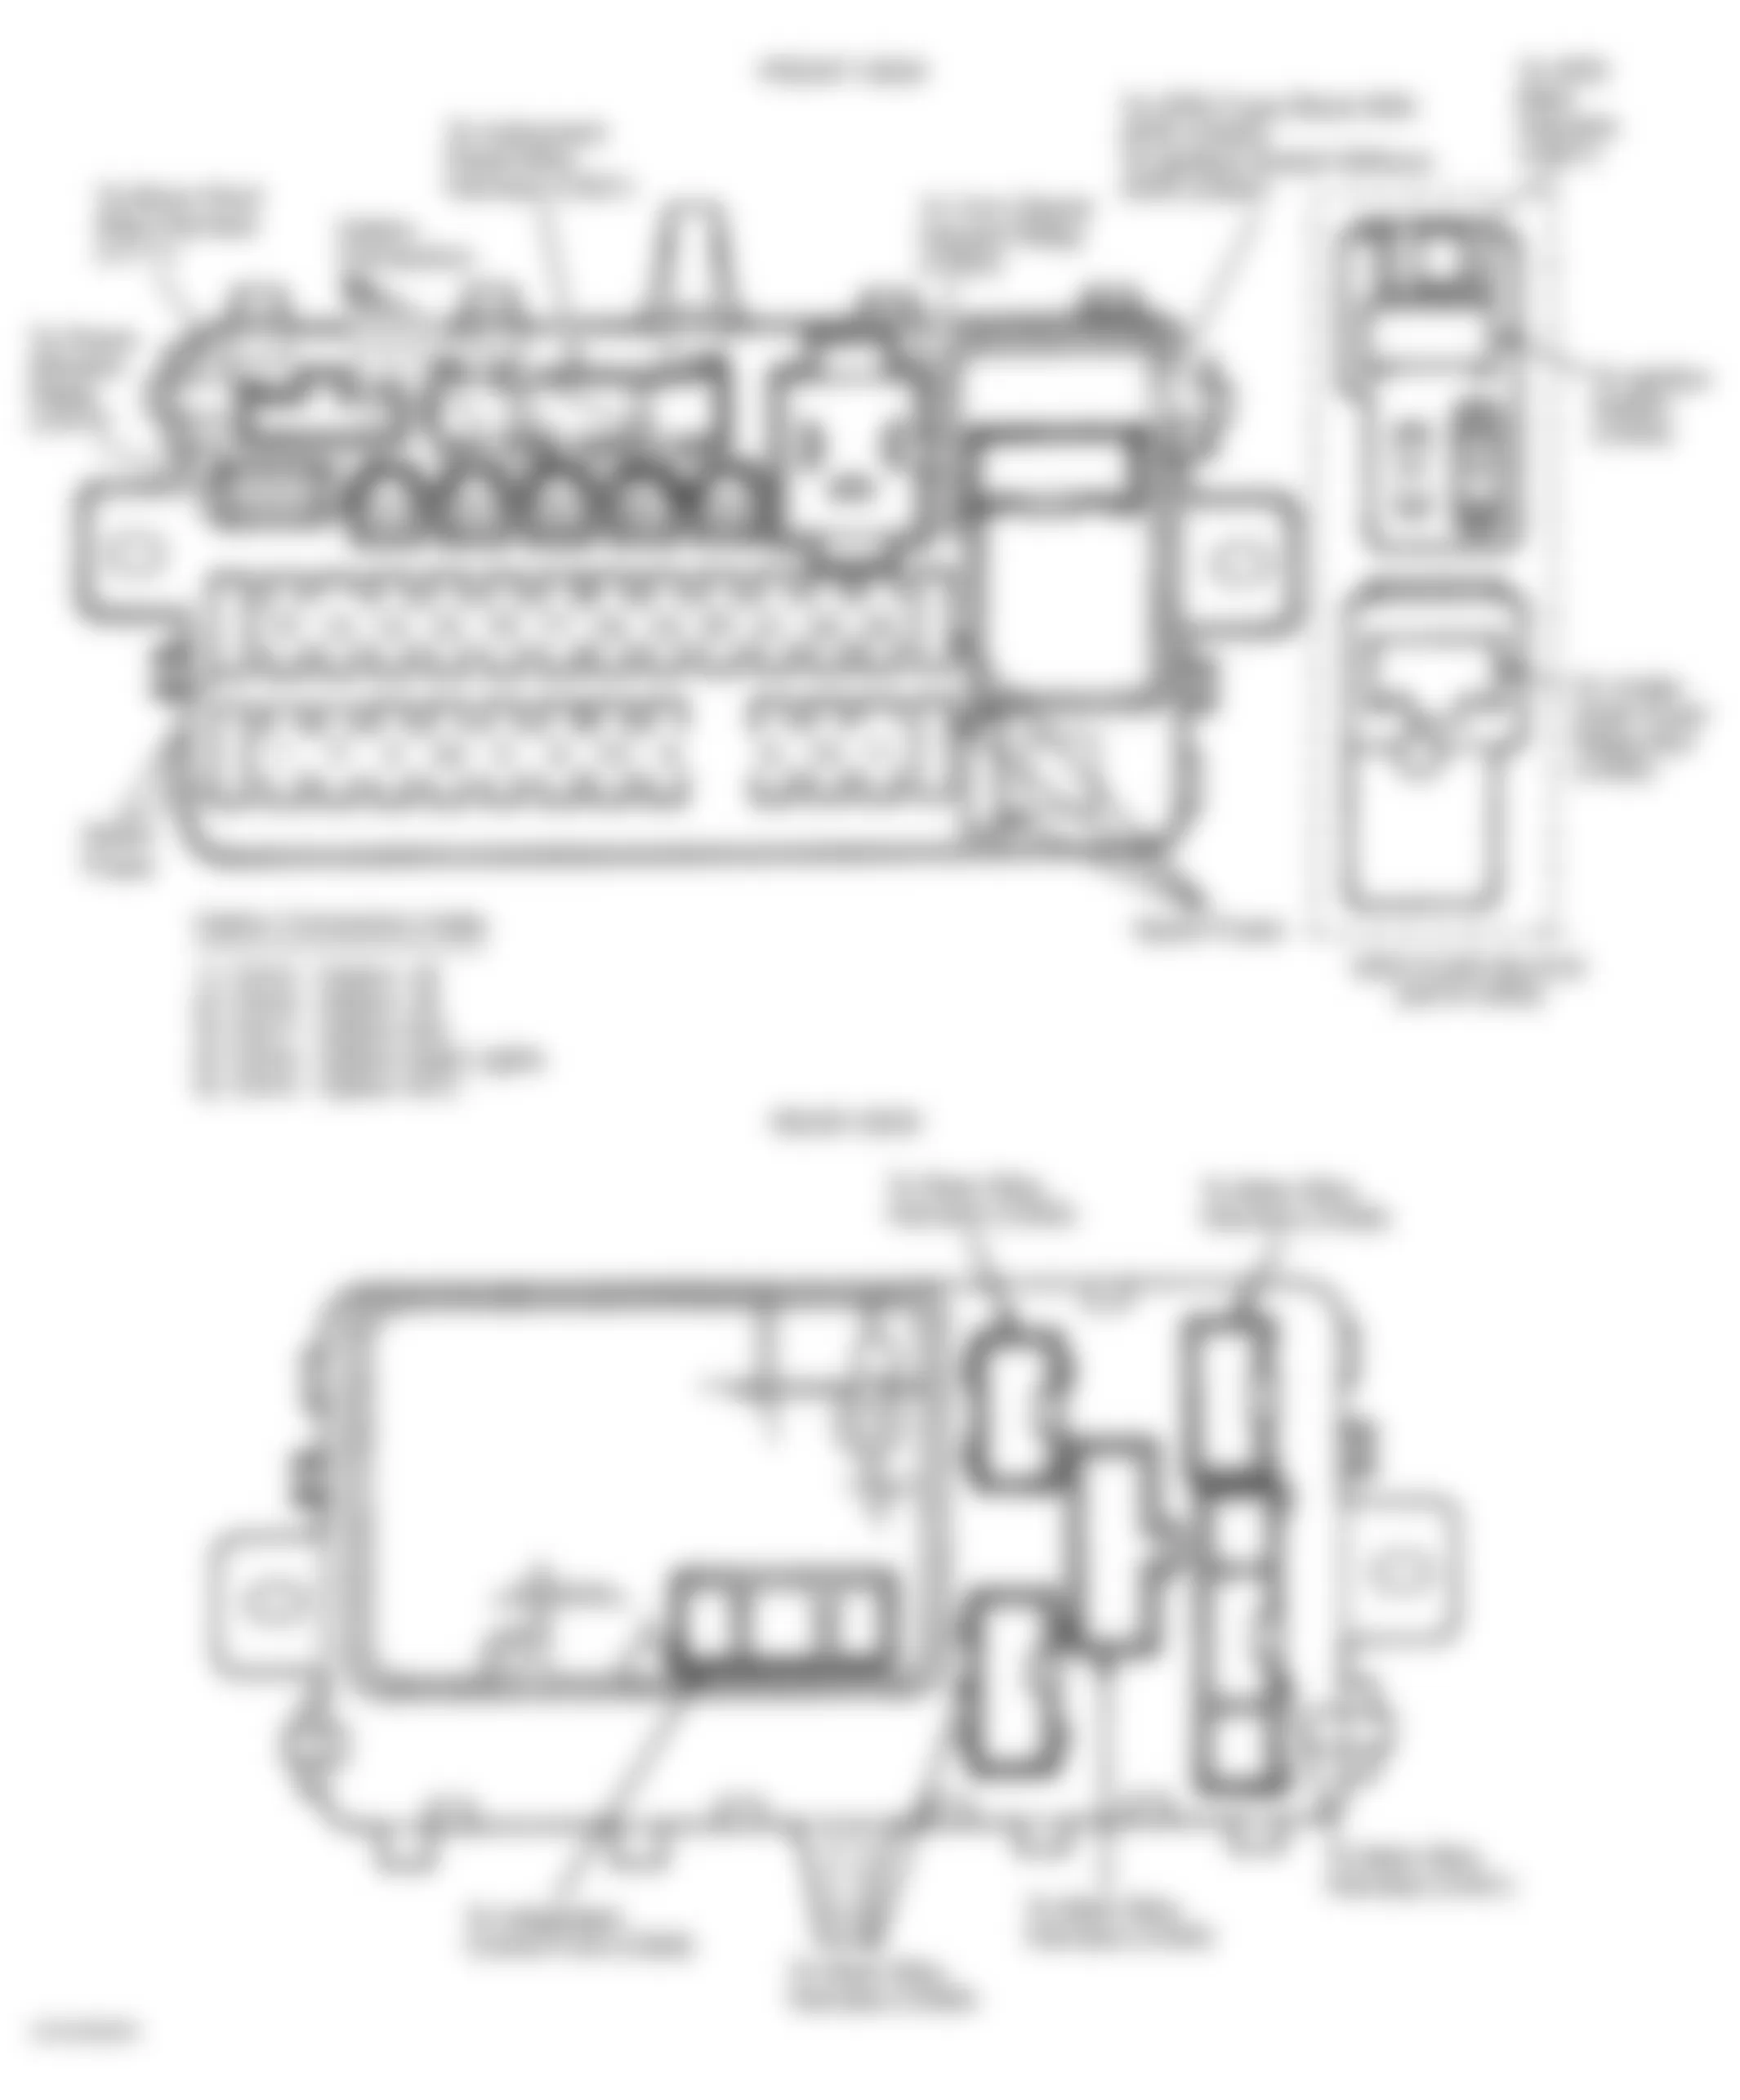 Honda Civic del Sol S 1993 - Component Locations -  Identifying Under-Dash Fuse/Relay Box Components (1994-95 Civic)